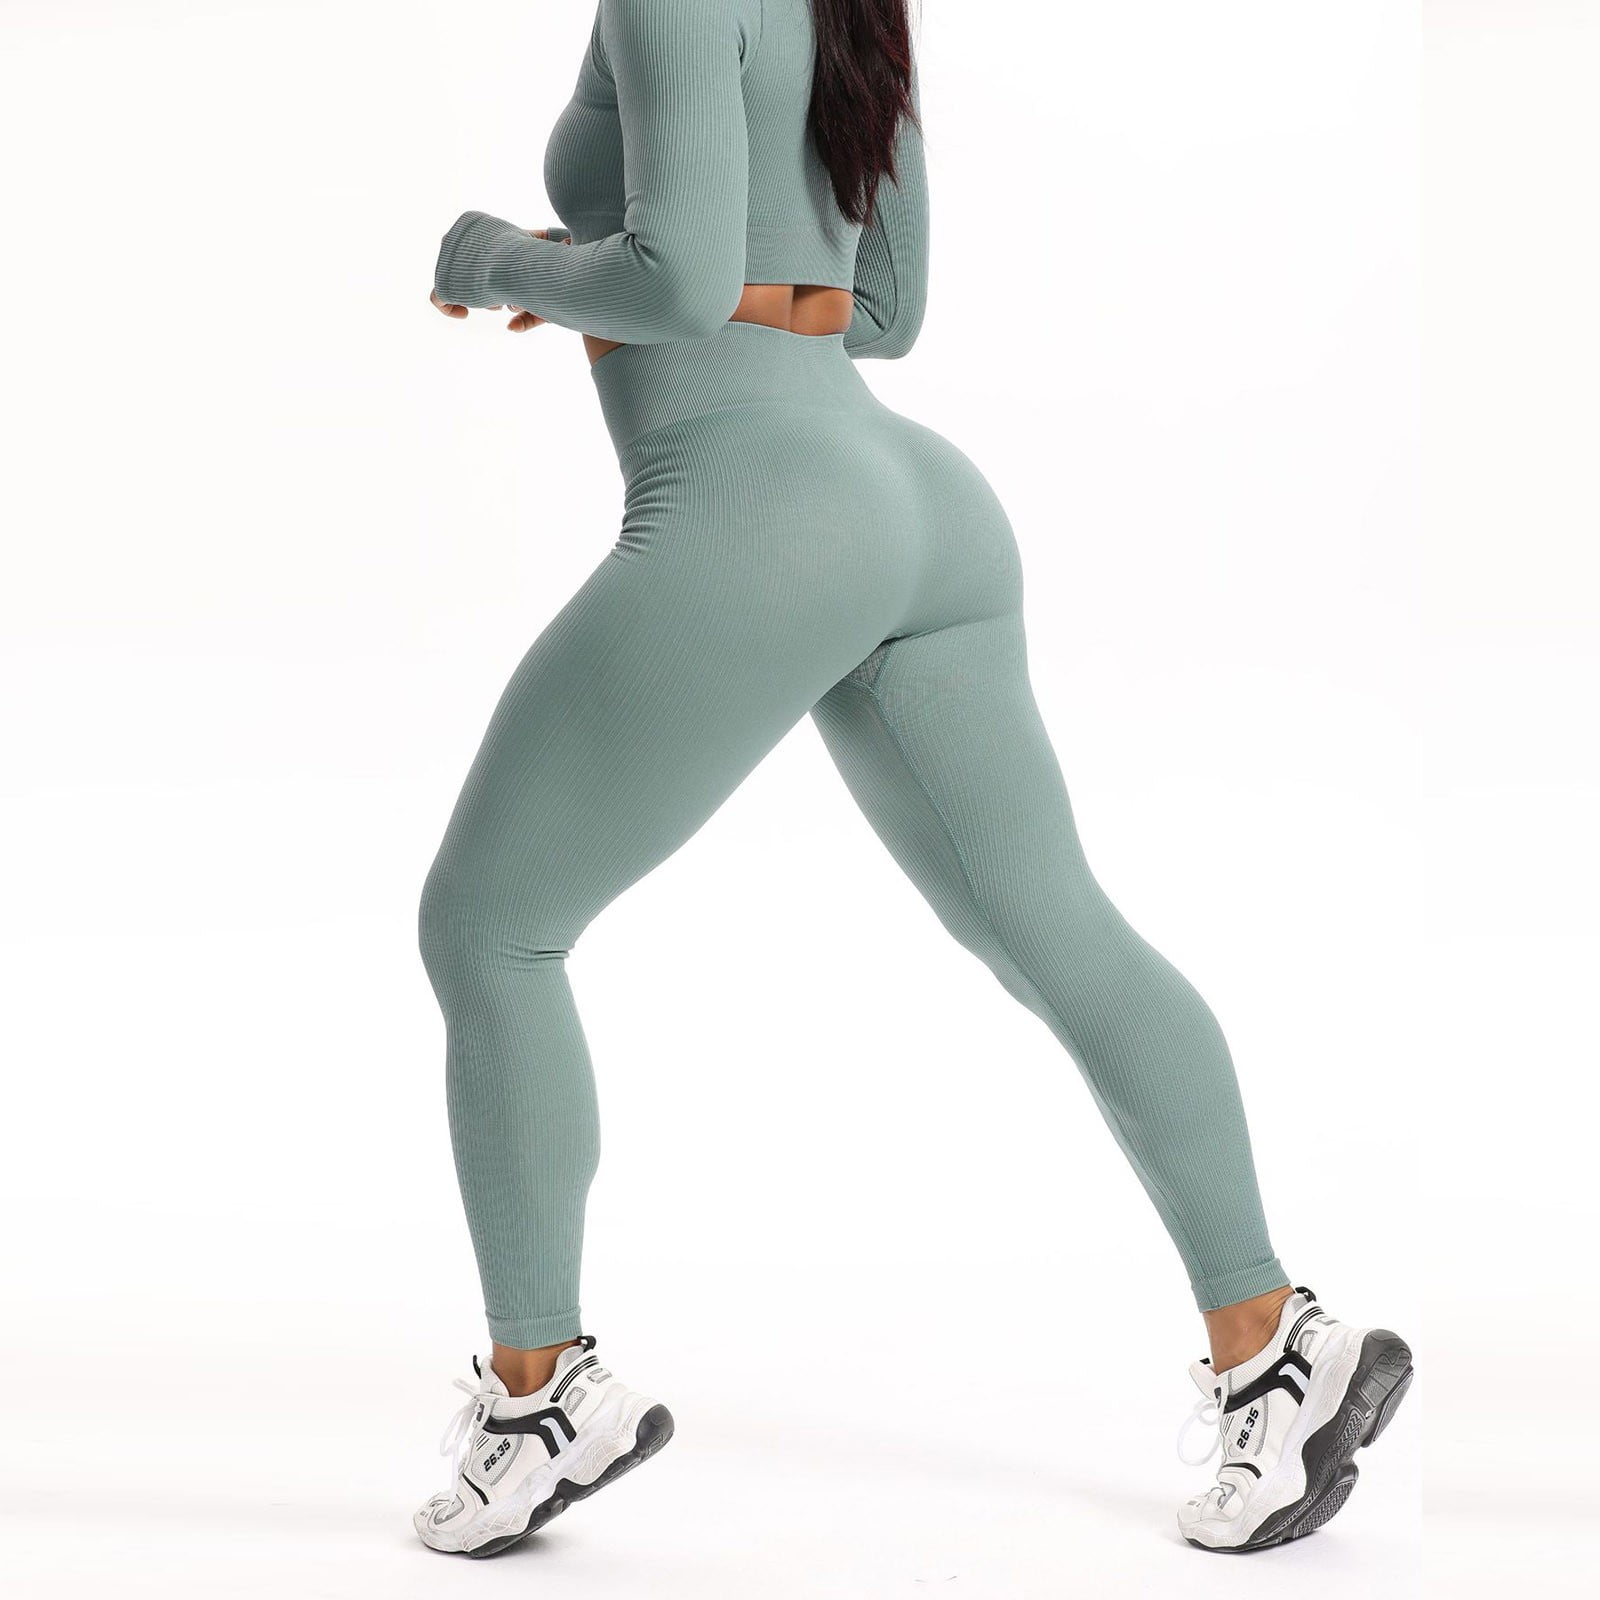 JDEFEG Maternity Yoga Pants Tall Yoga Running Sports Pants Workout